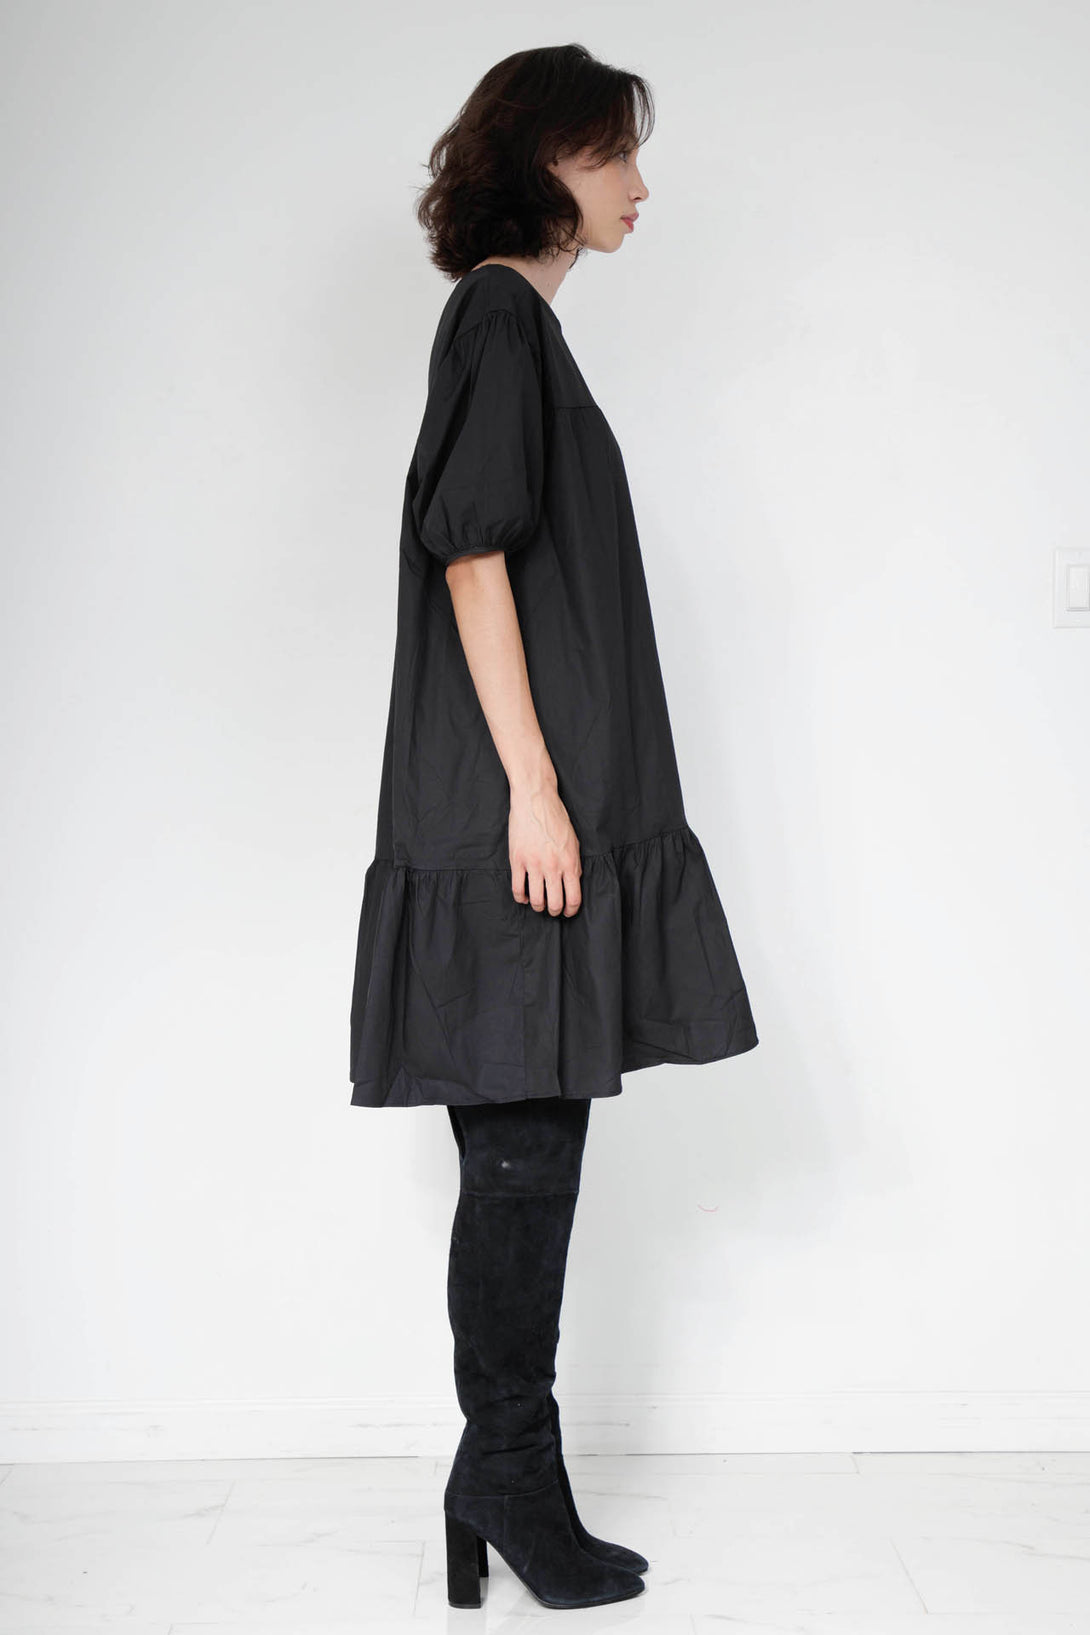 ladies black midi dress, ladies knee length dresses, elegant black midi dress, HT 360 Collective, 